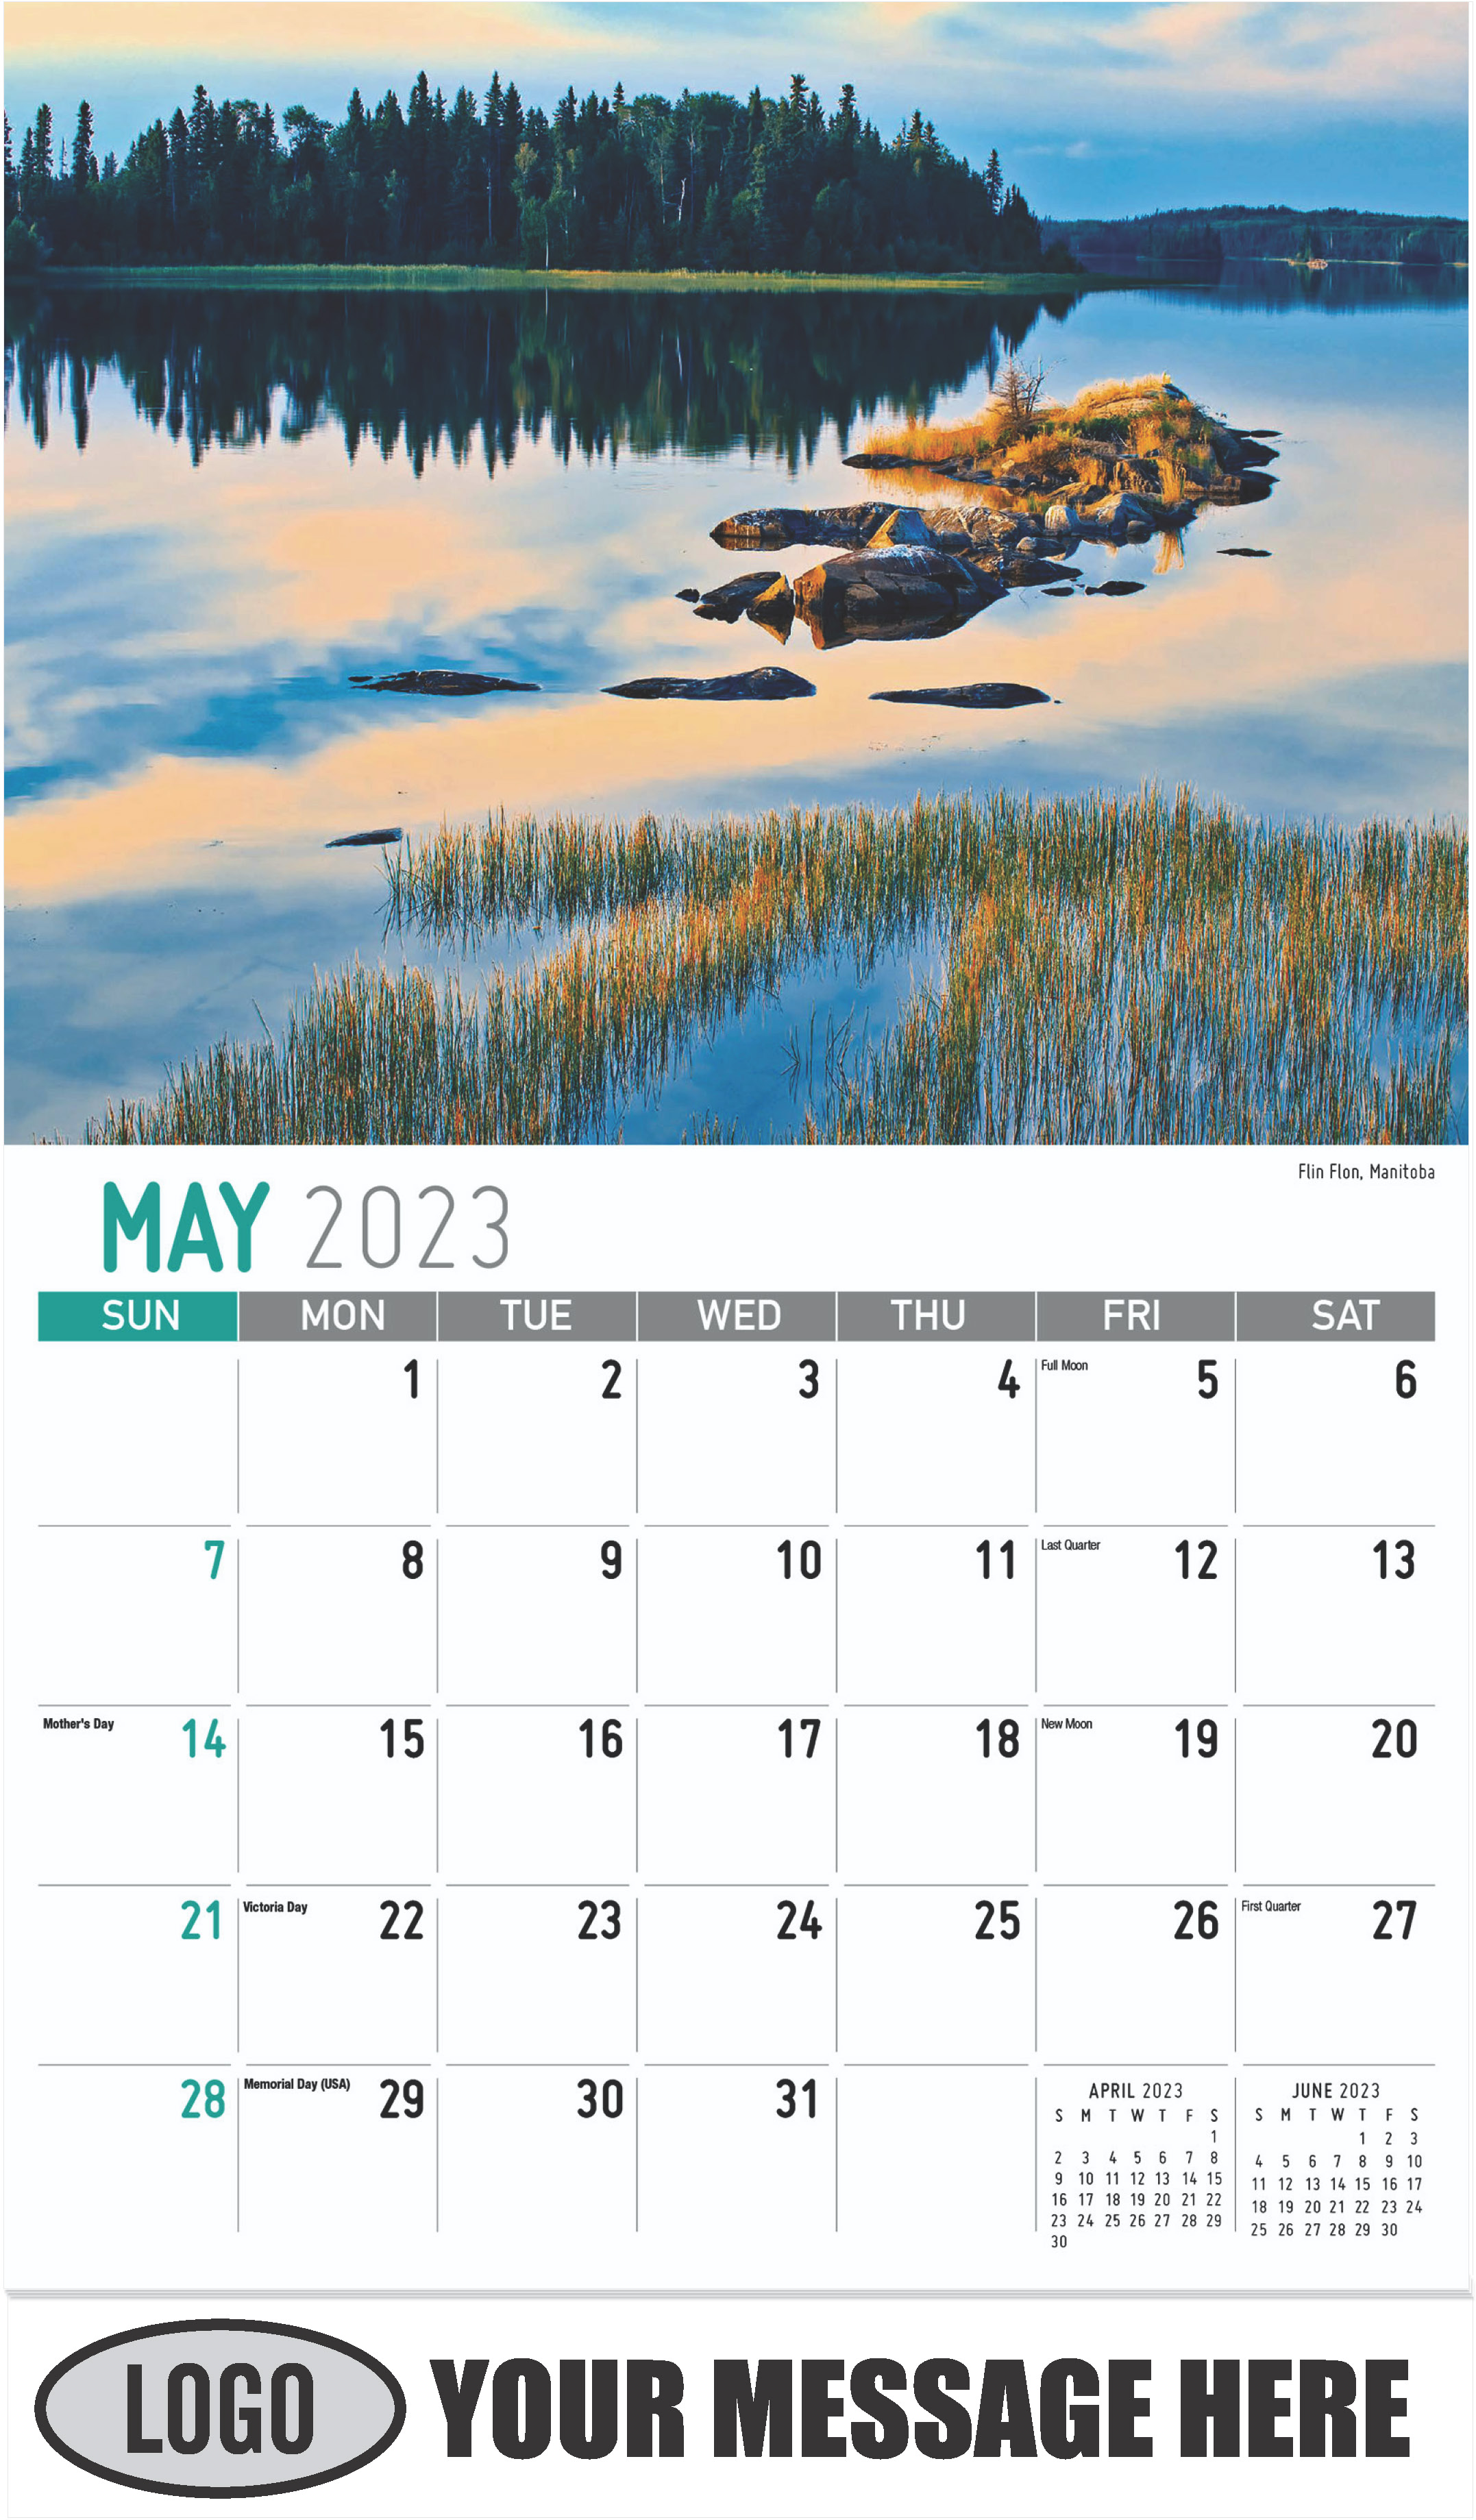 Flin Flon, Manitoba - May - Scenes of Western Canada 2023 Promotional Calendar